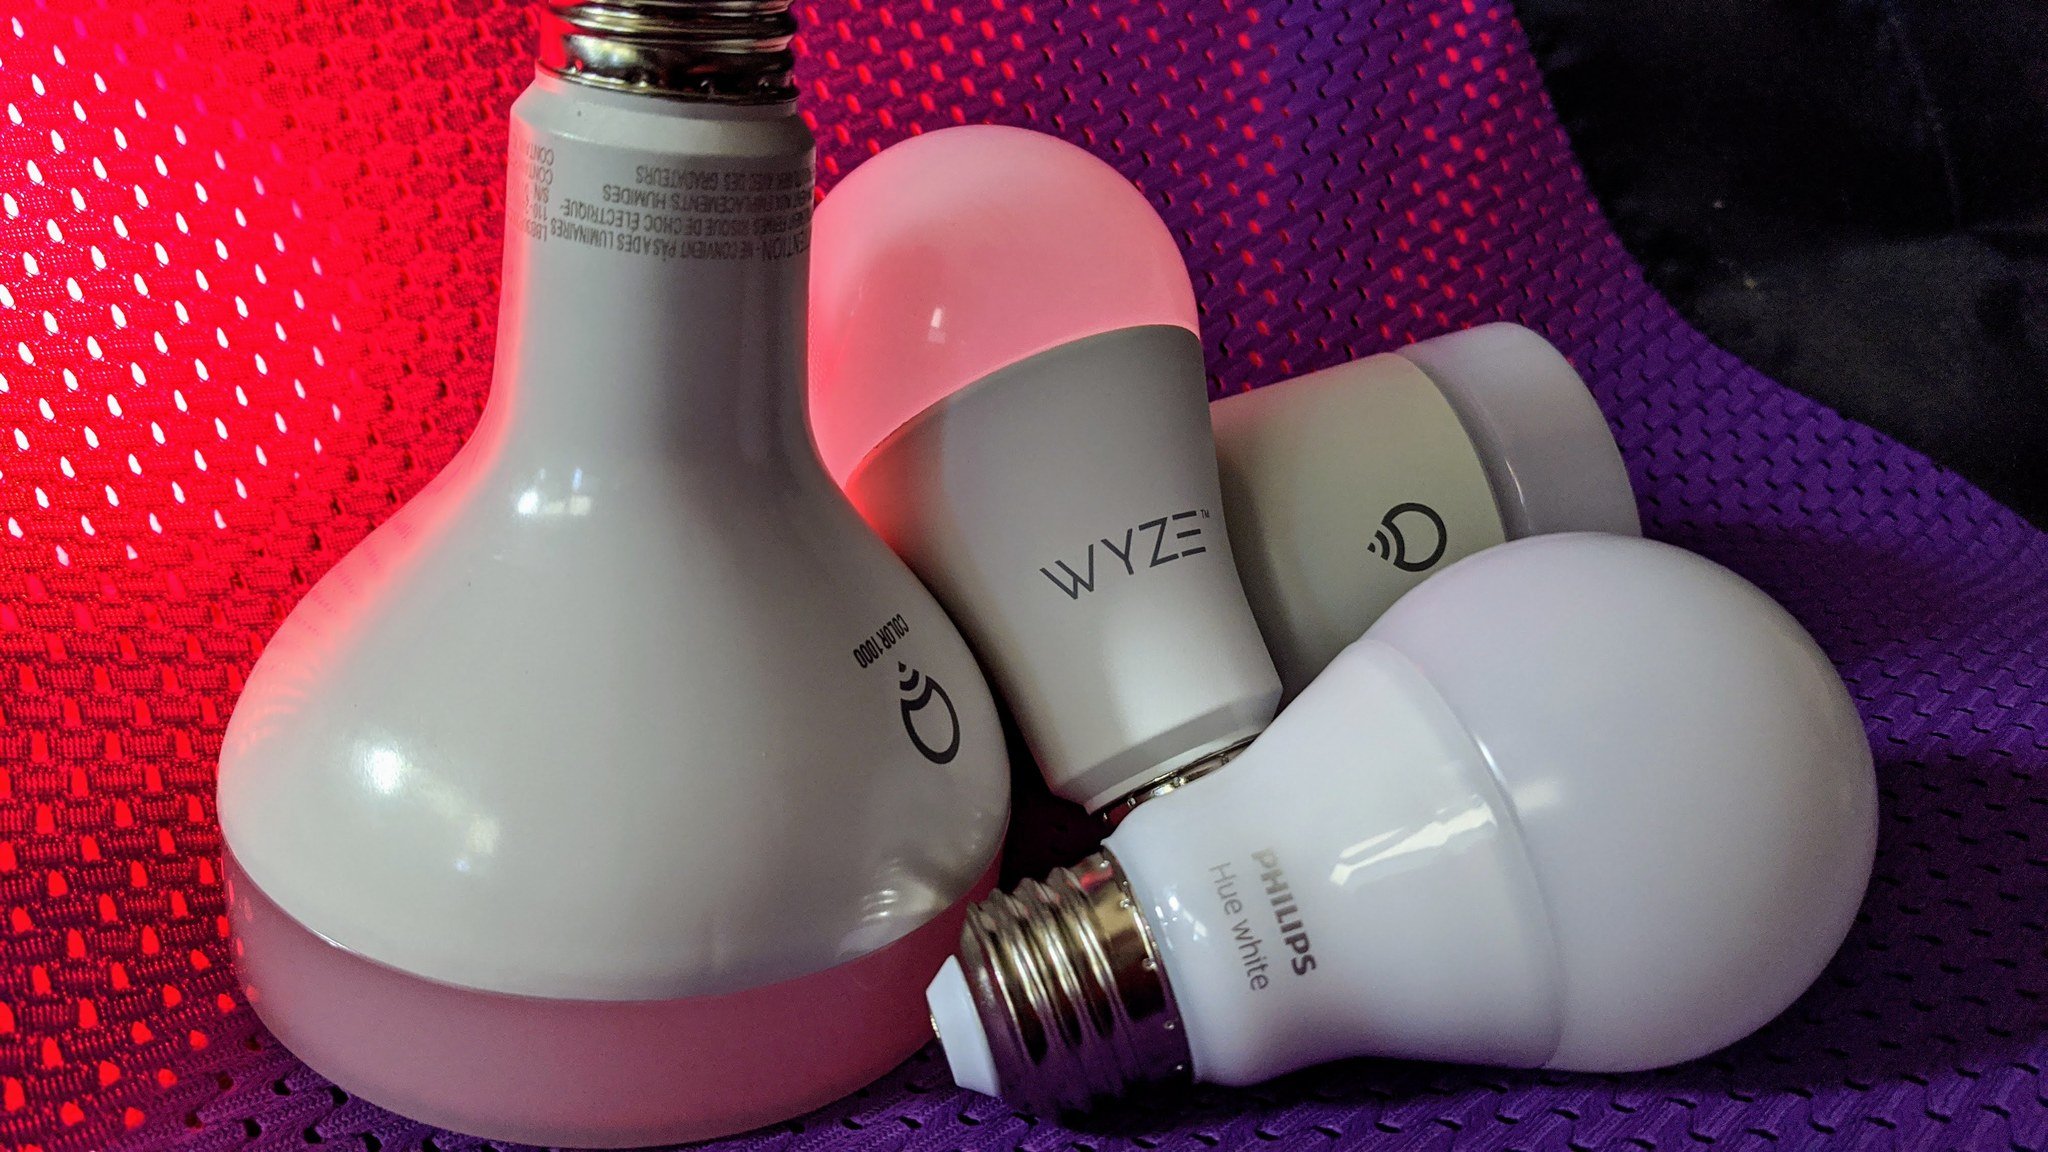 innr BR30 Smart Bulb, Works with Philips Hue* BR30, Alexa, Hey Google,  SmartThings (Hub Required), Zigbee Bulb, Dimmable Warm White LED Light  Bulbs